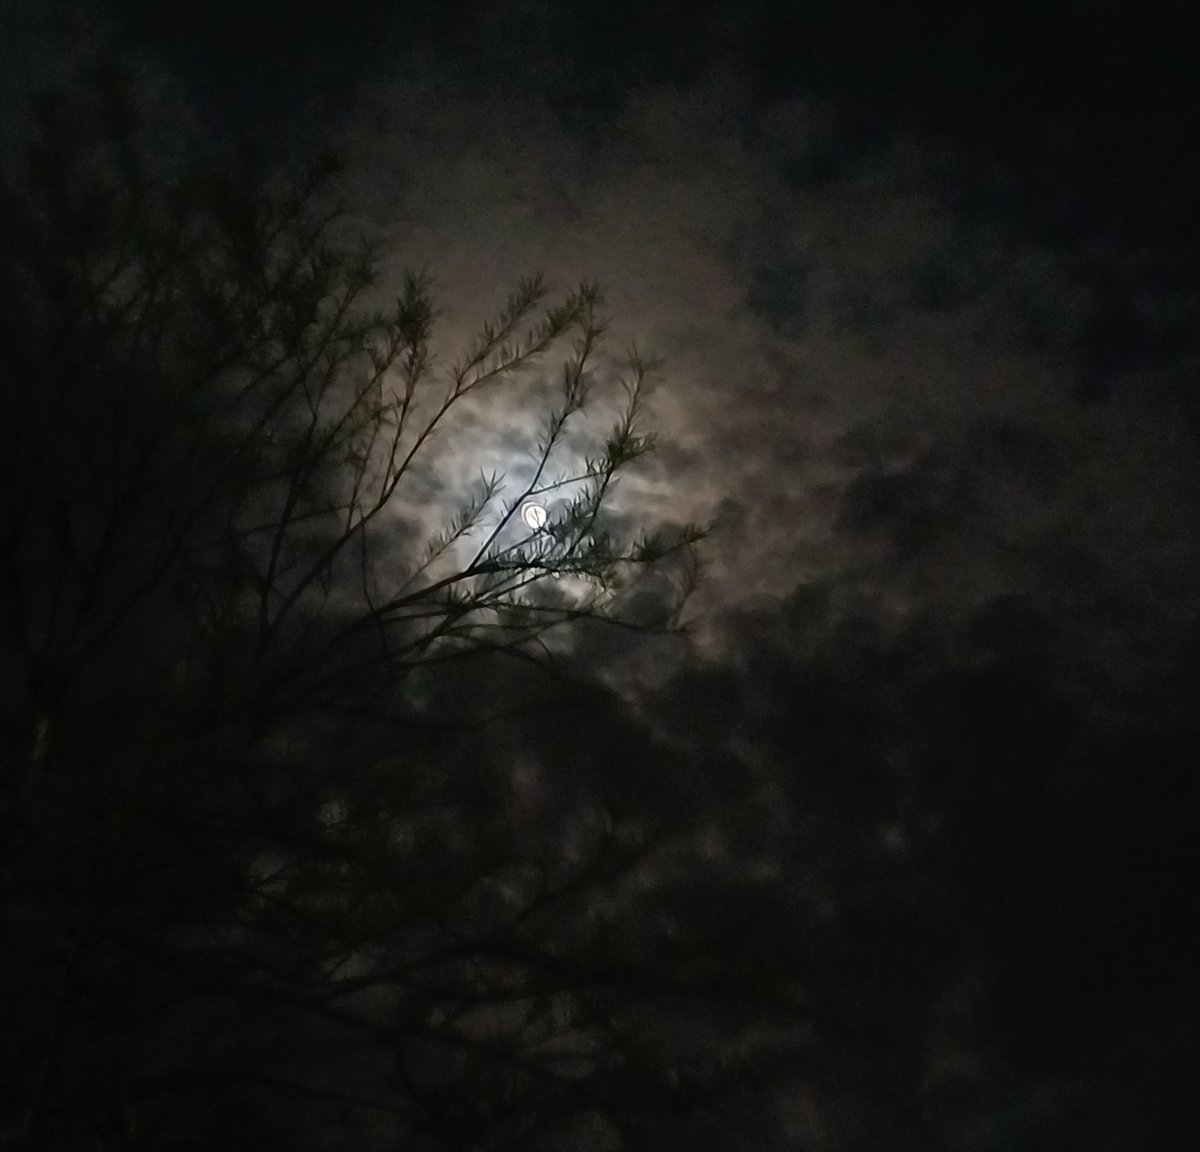 Moonlit night, enchanting branhes and cloudy sky.
#nightsky